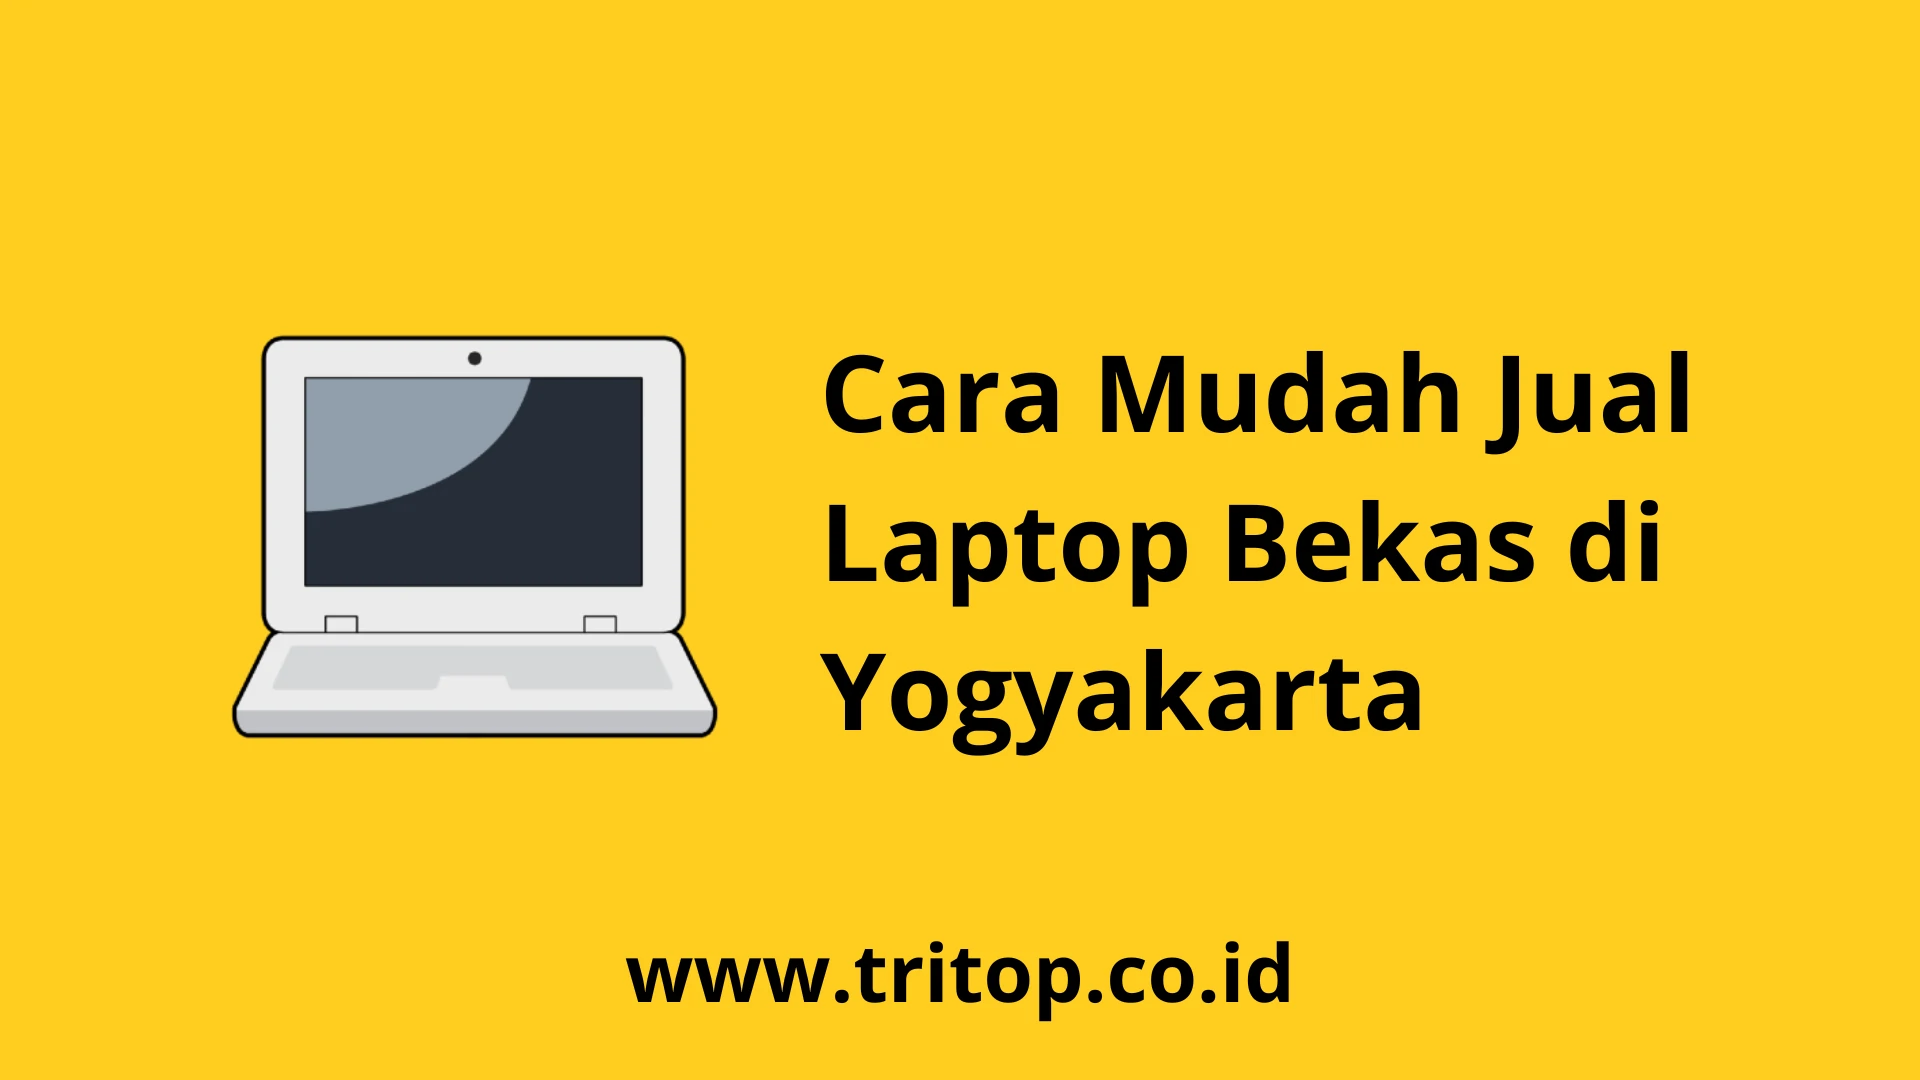 Jual Laptop Bekas Yogyakarta www.tritop.co.id